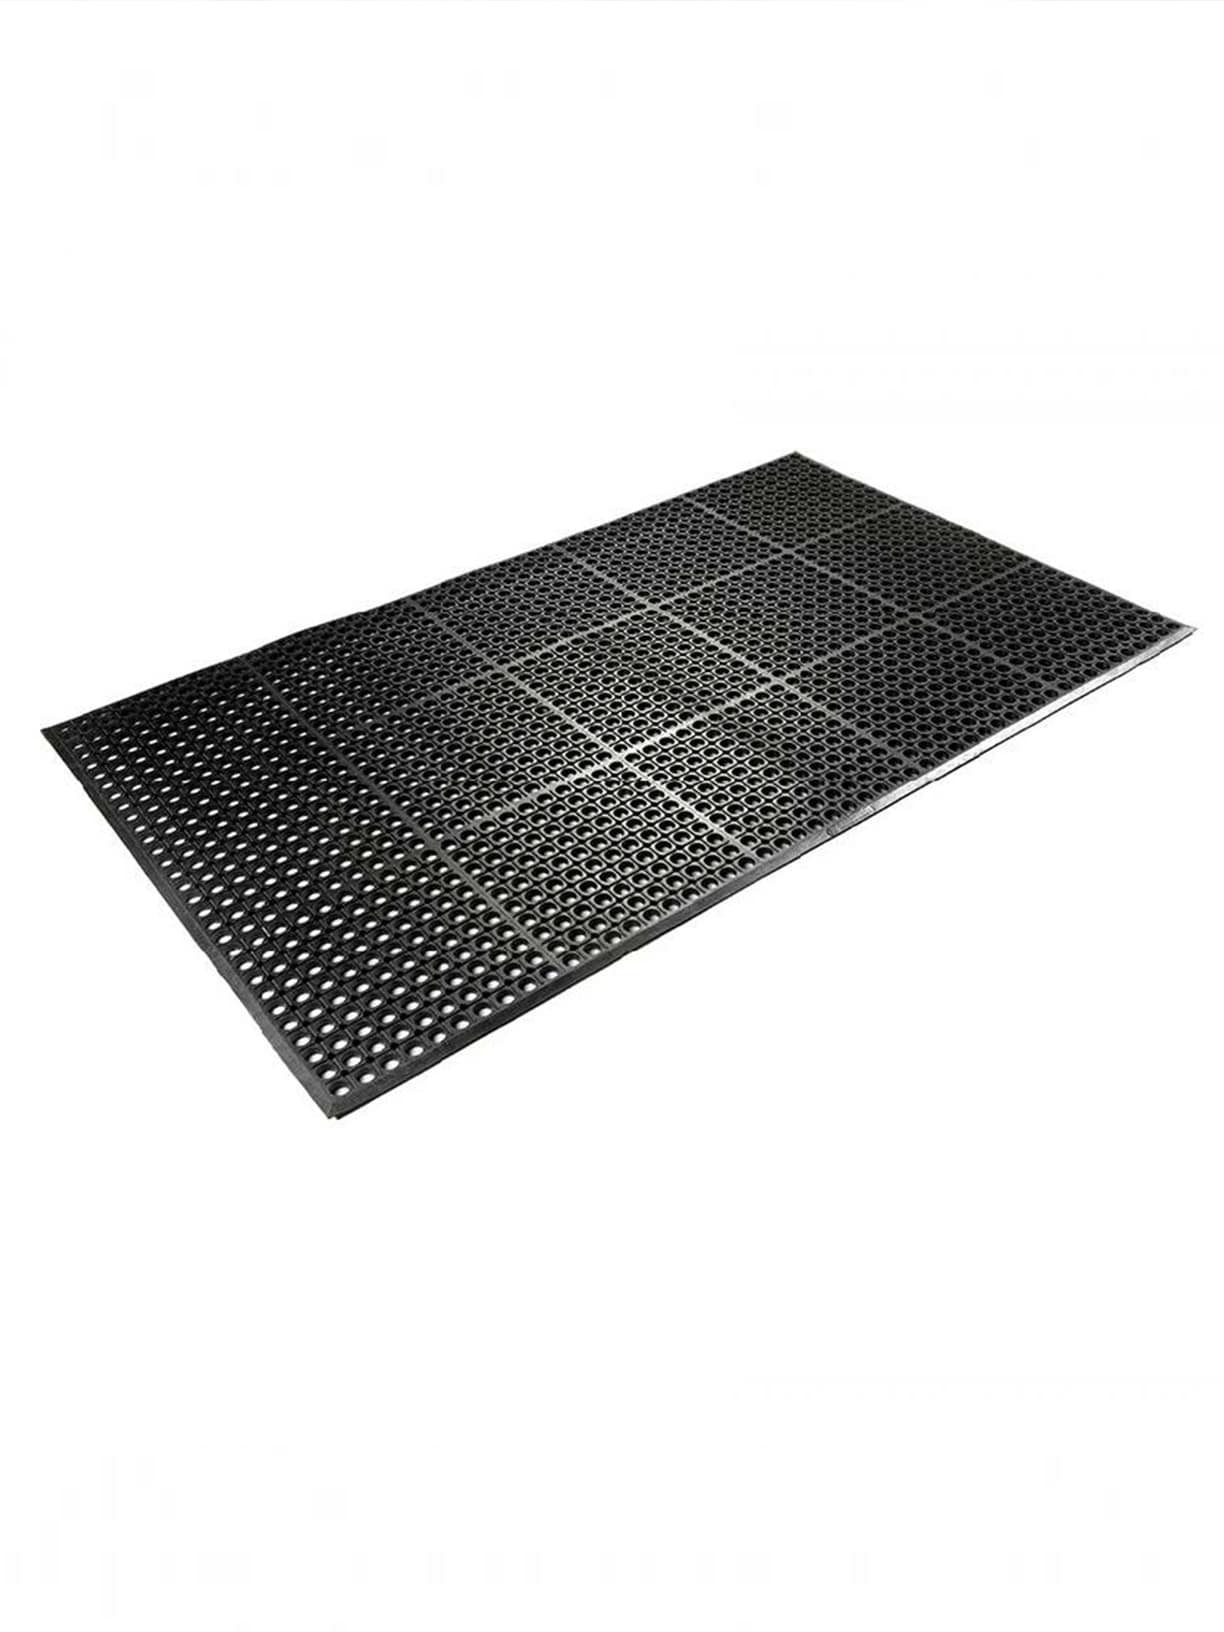 ErgoTech Products: Tehnoguma - Drainage Floor mats 2